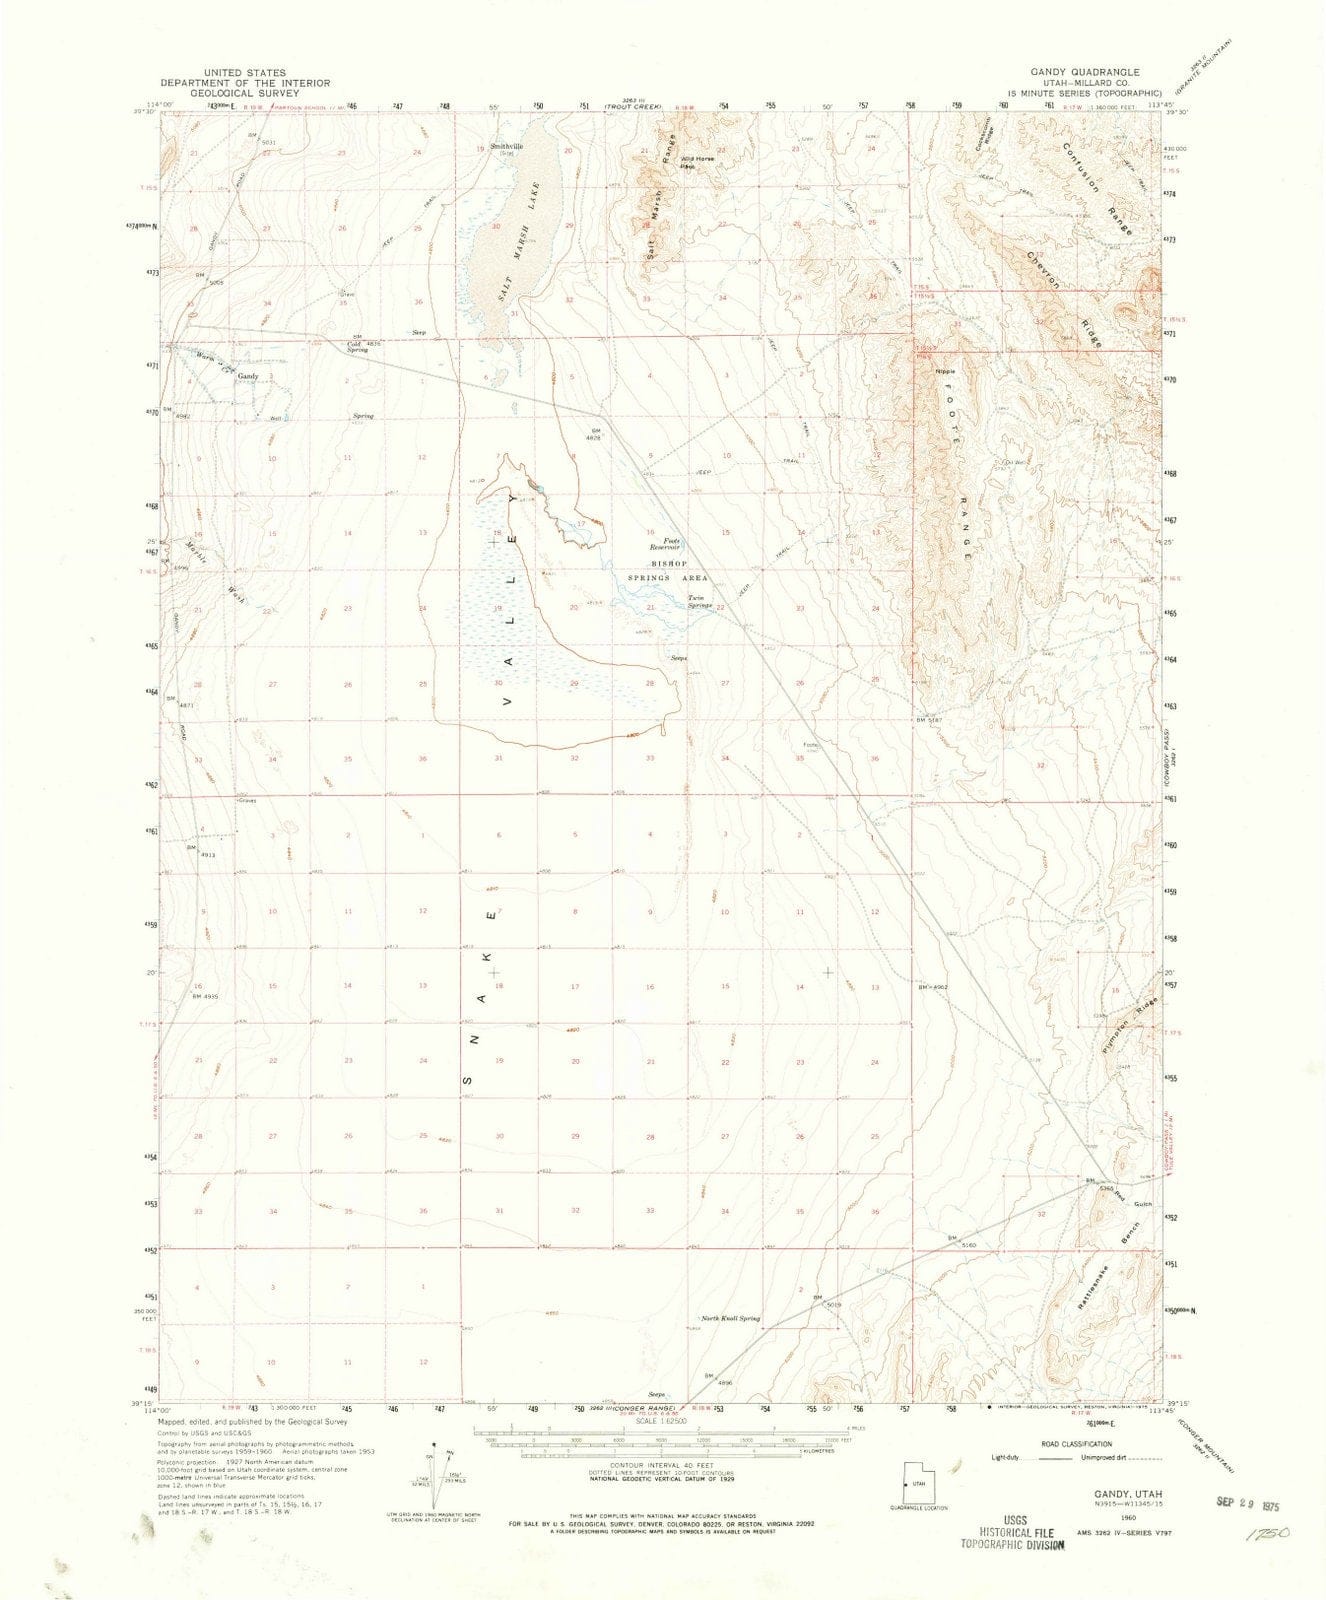 1960 Gandy, UT - Utah - USGS Topographic Map